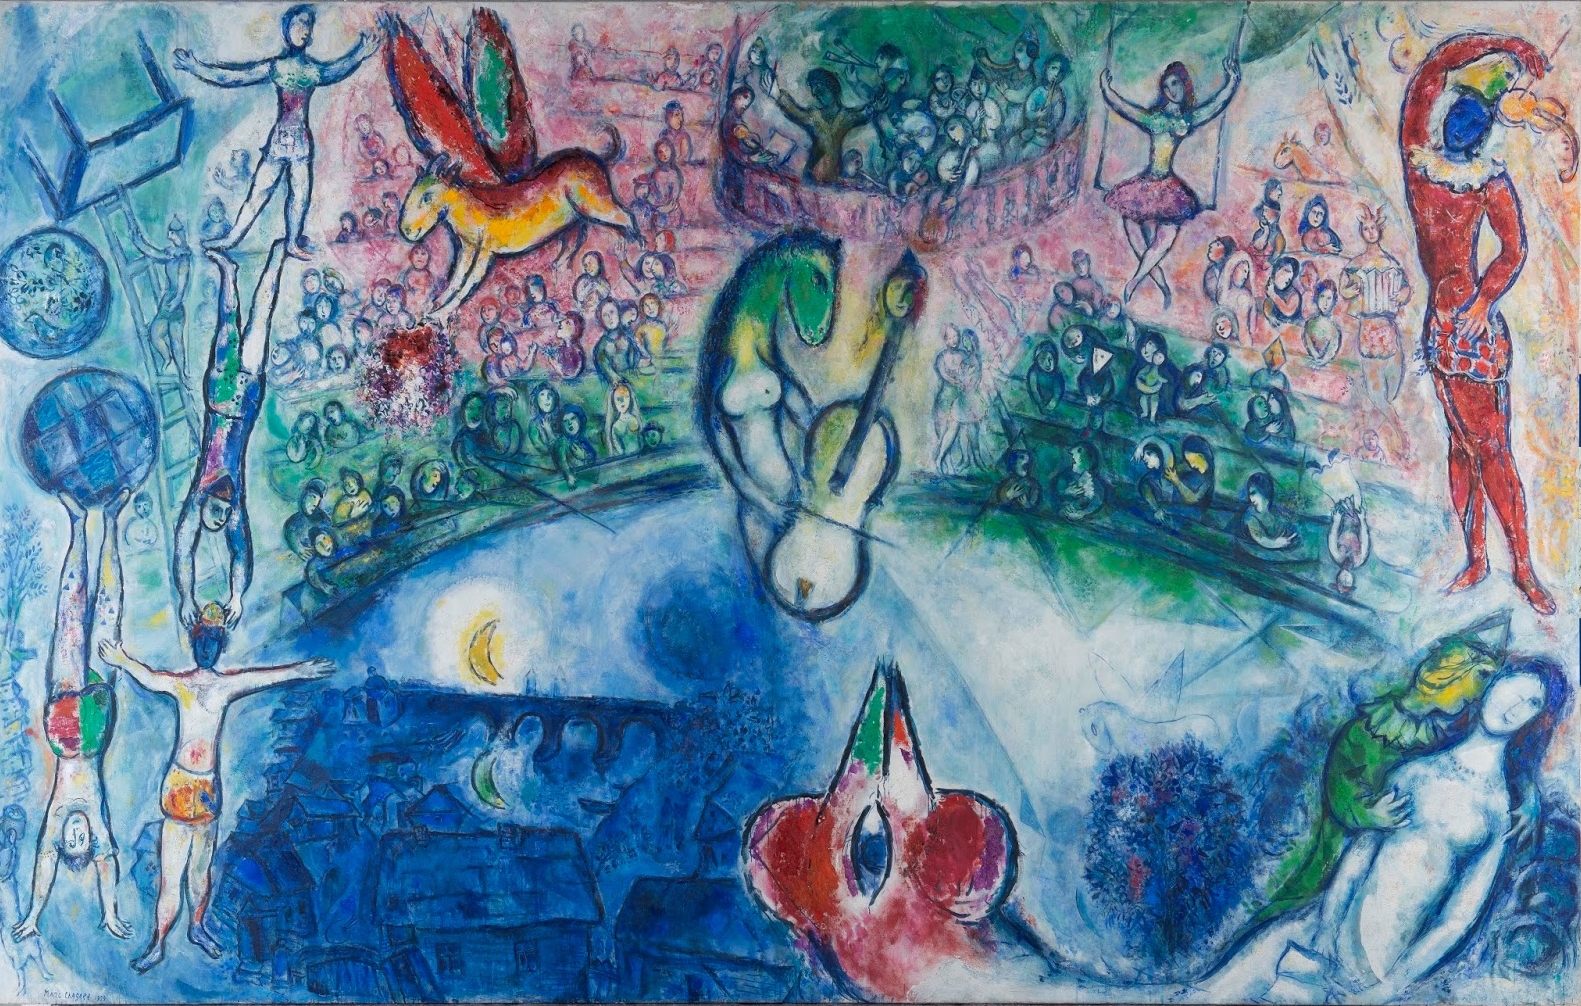 Marc+Chagall-1887-1985 (3).jpg